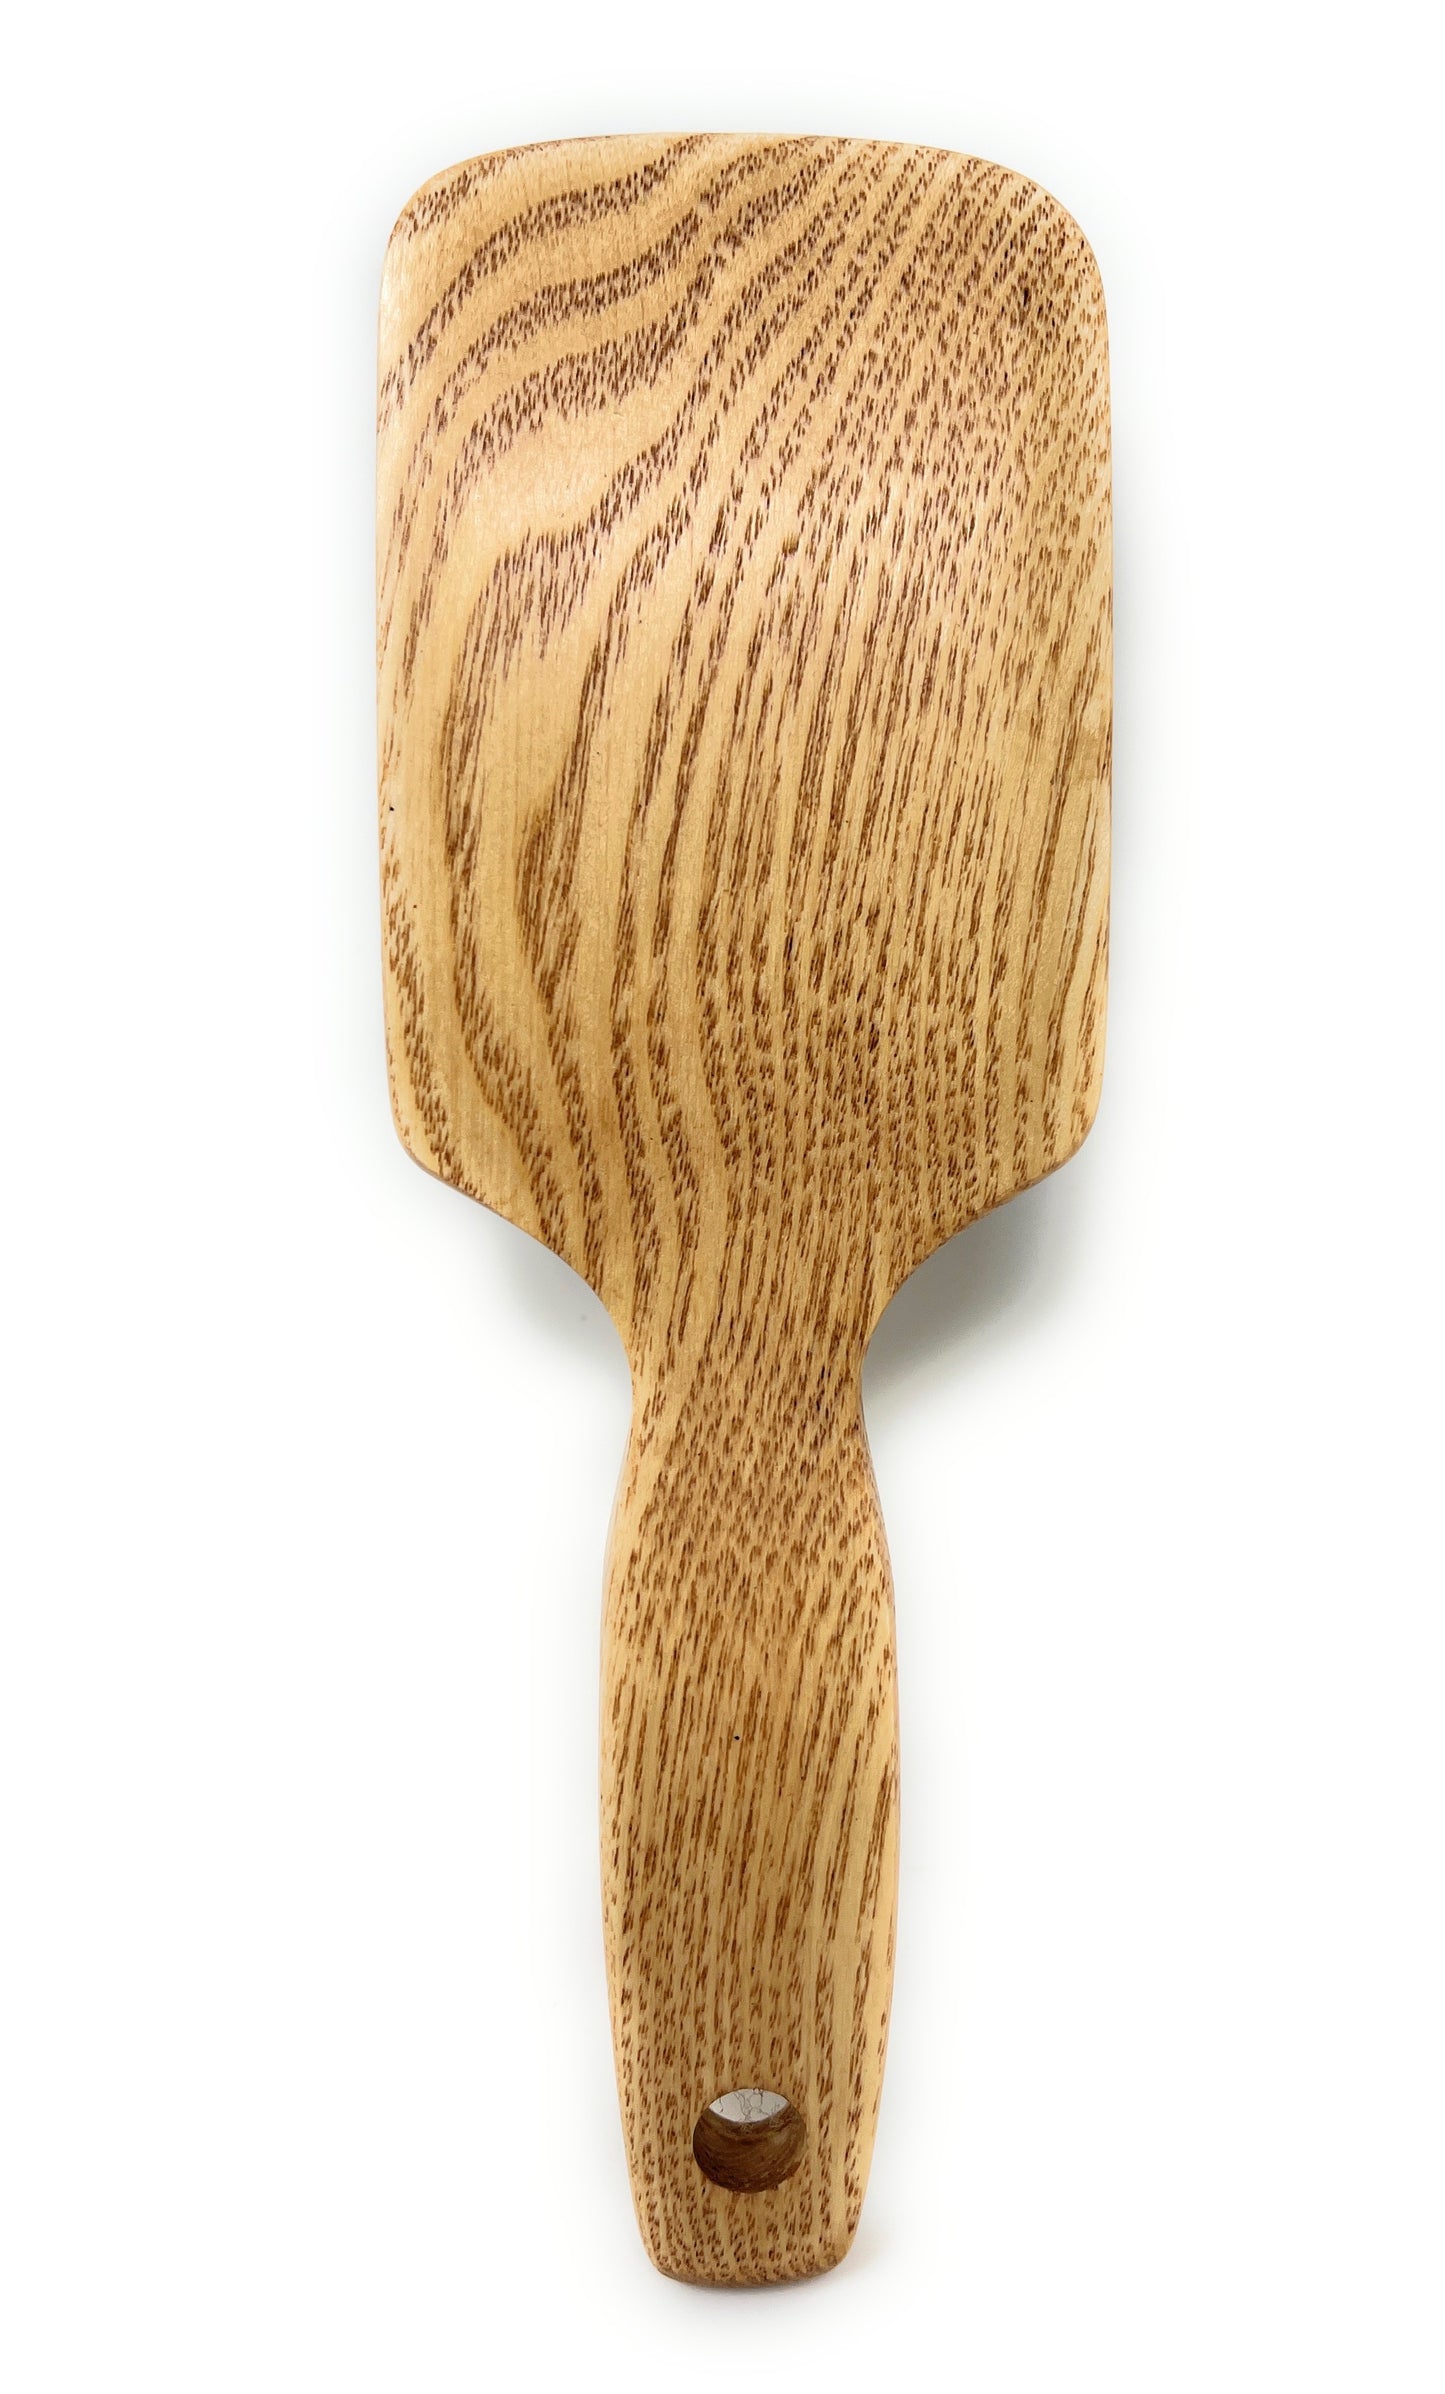 Phillips Brush Gentlemens’ Quarters Club Classic Style Boar Bristle Hair Brush for Men Wood Body.